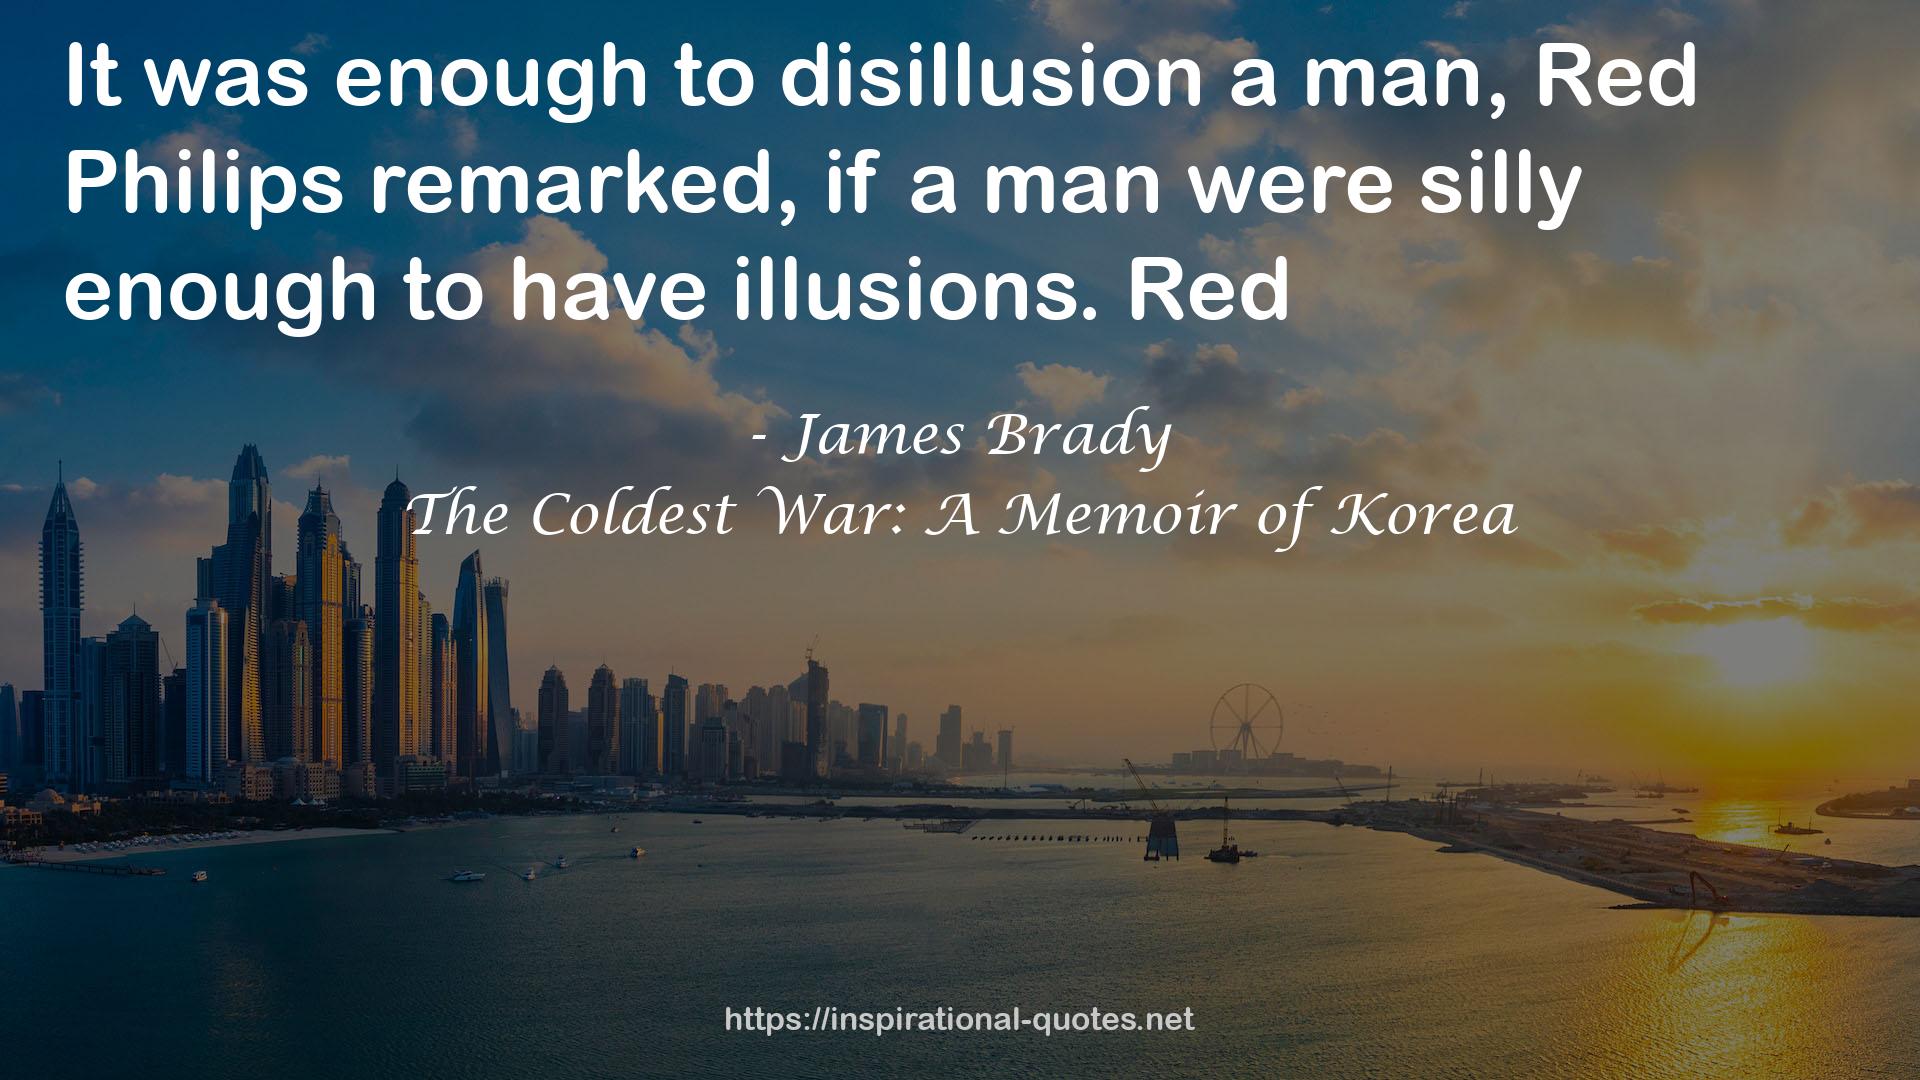 The Coldest War: A Memoir of Korea QUOTES